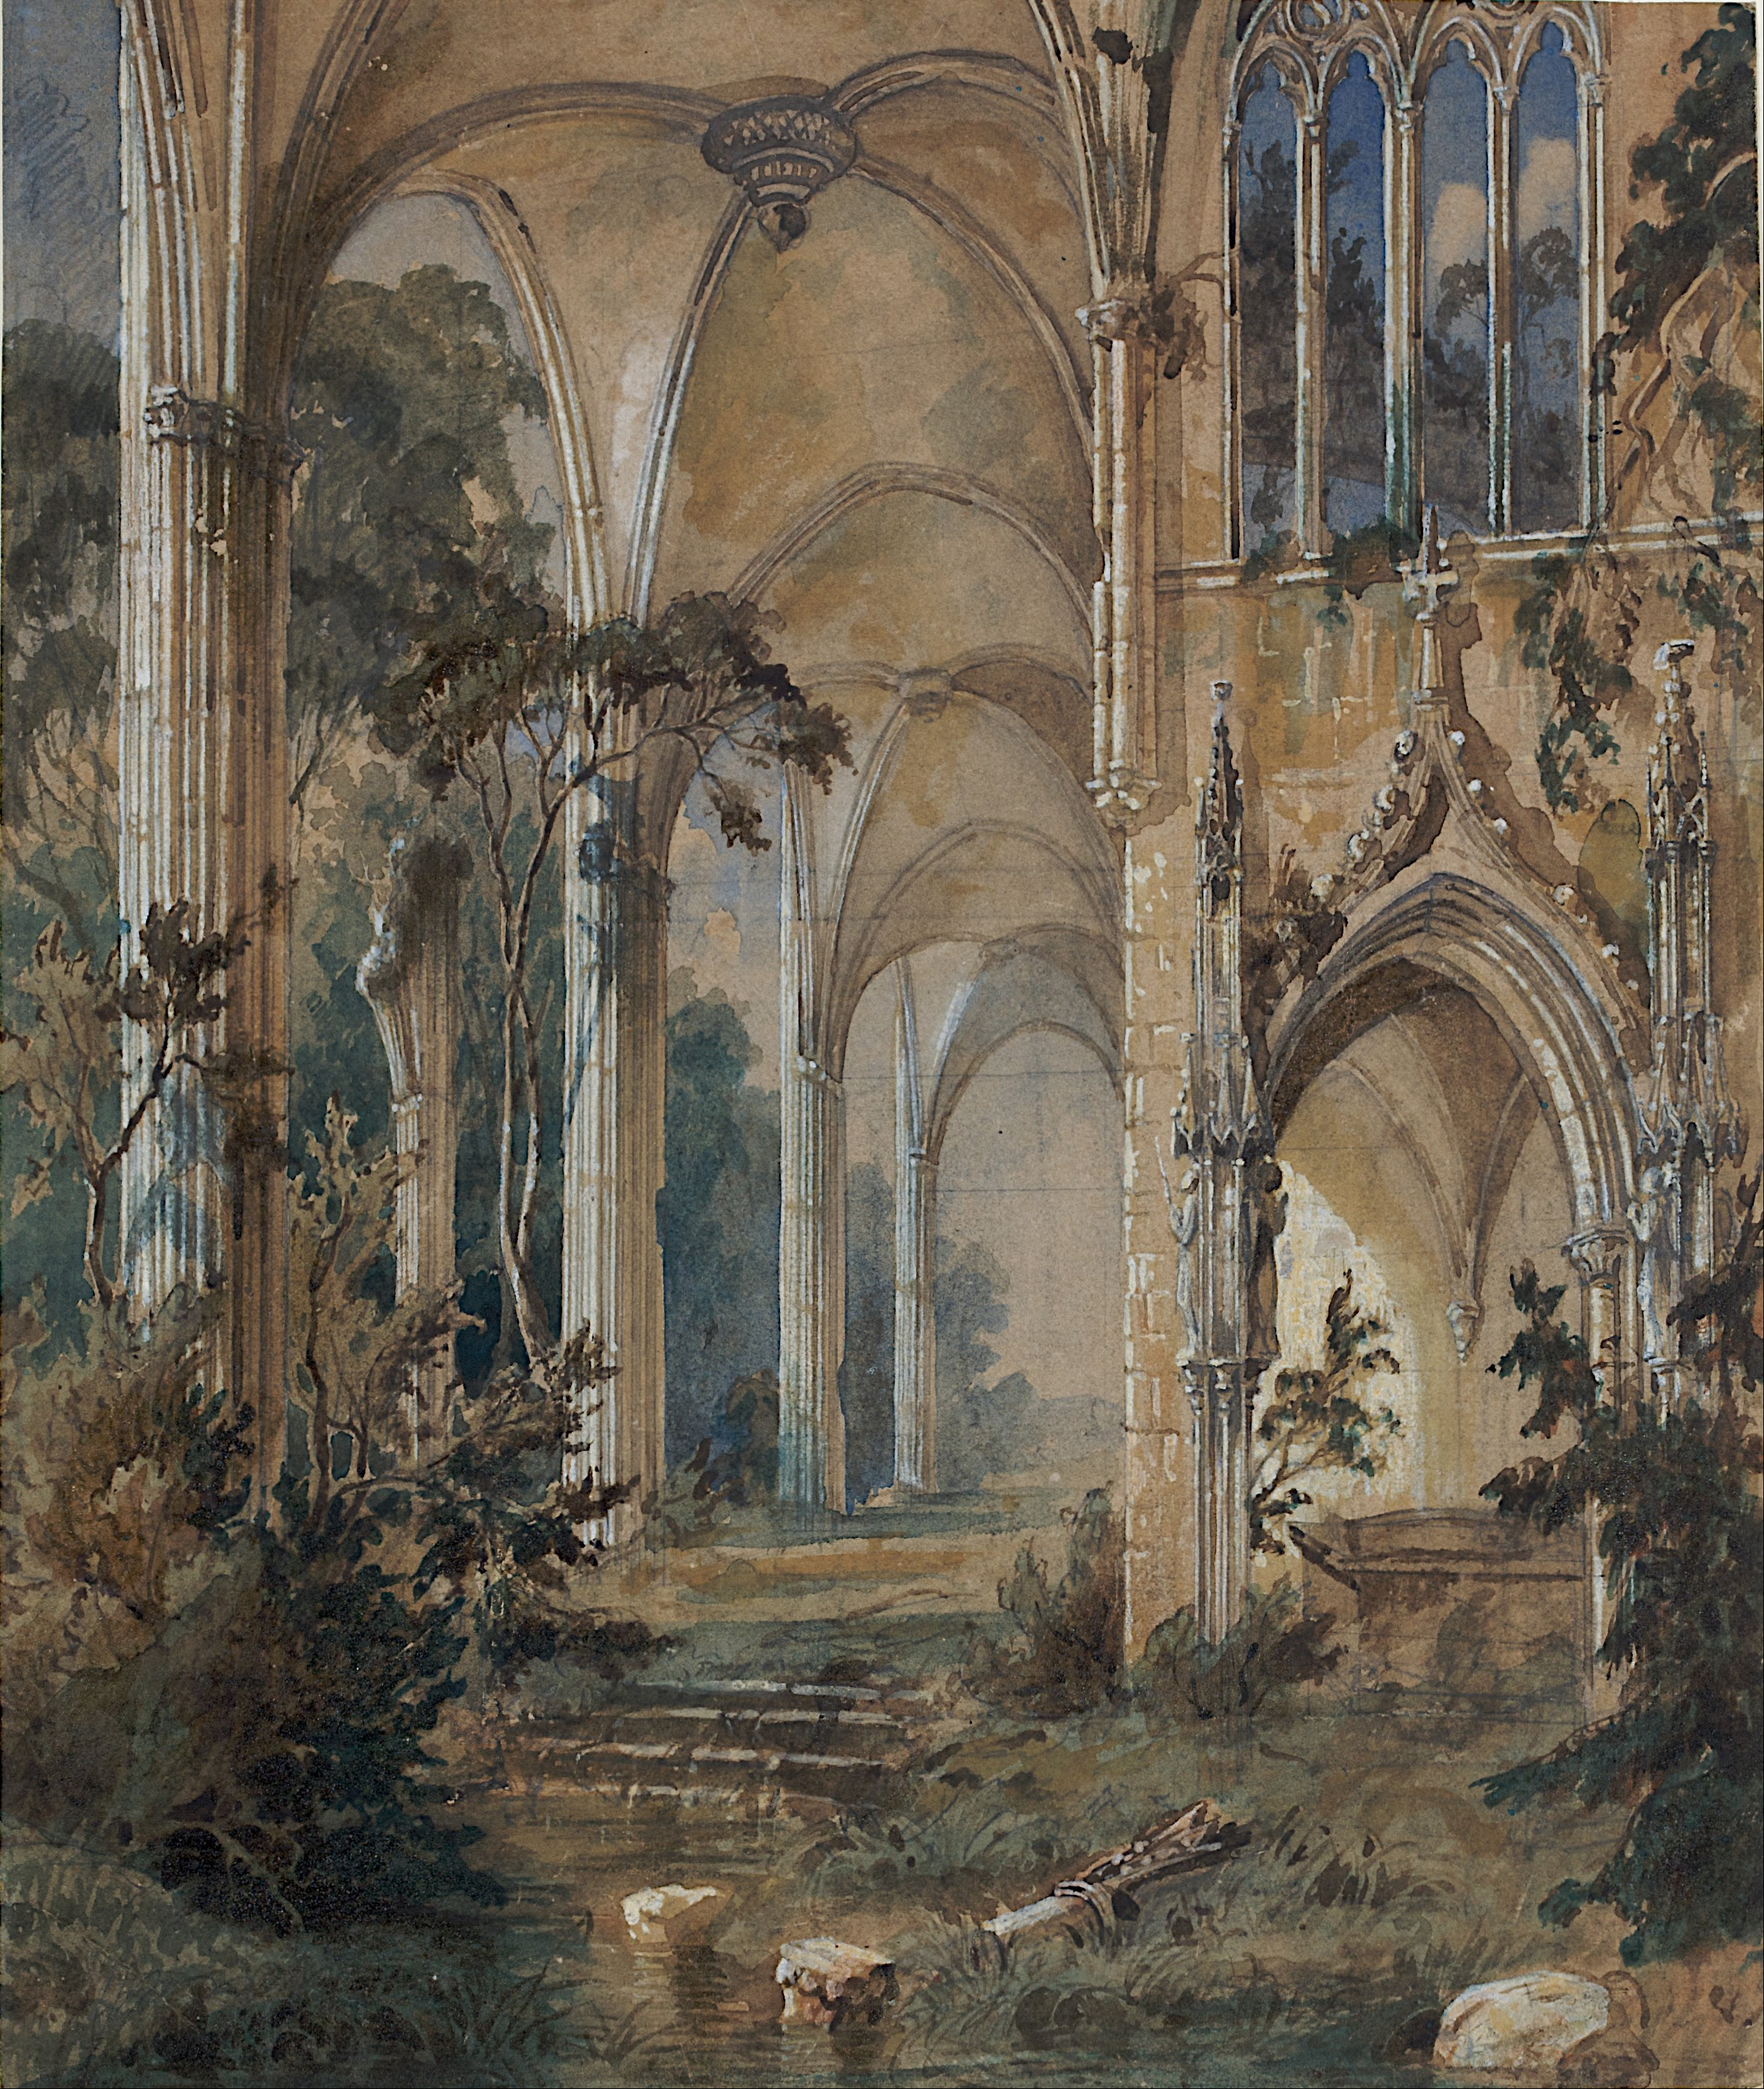 Ruins in art: Carl Blechen, Gothic Church Ruin